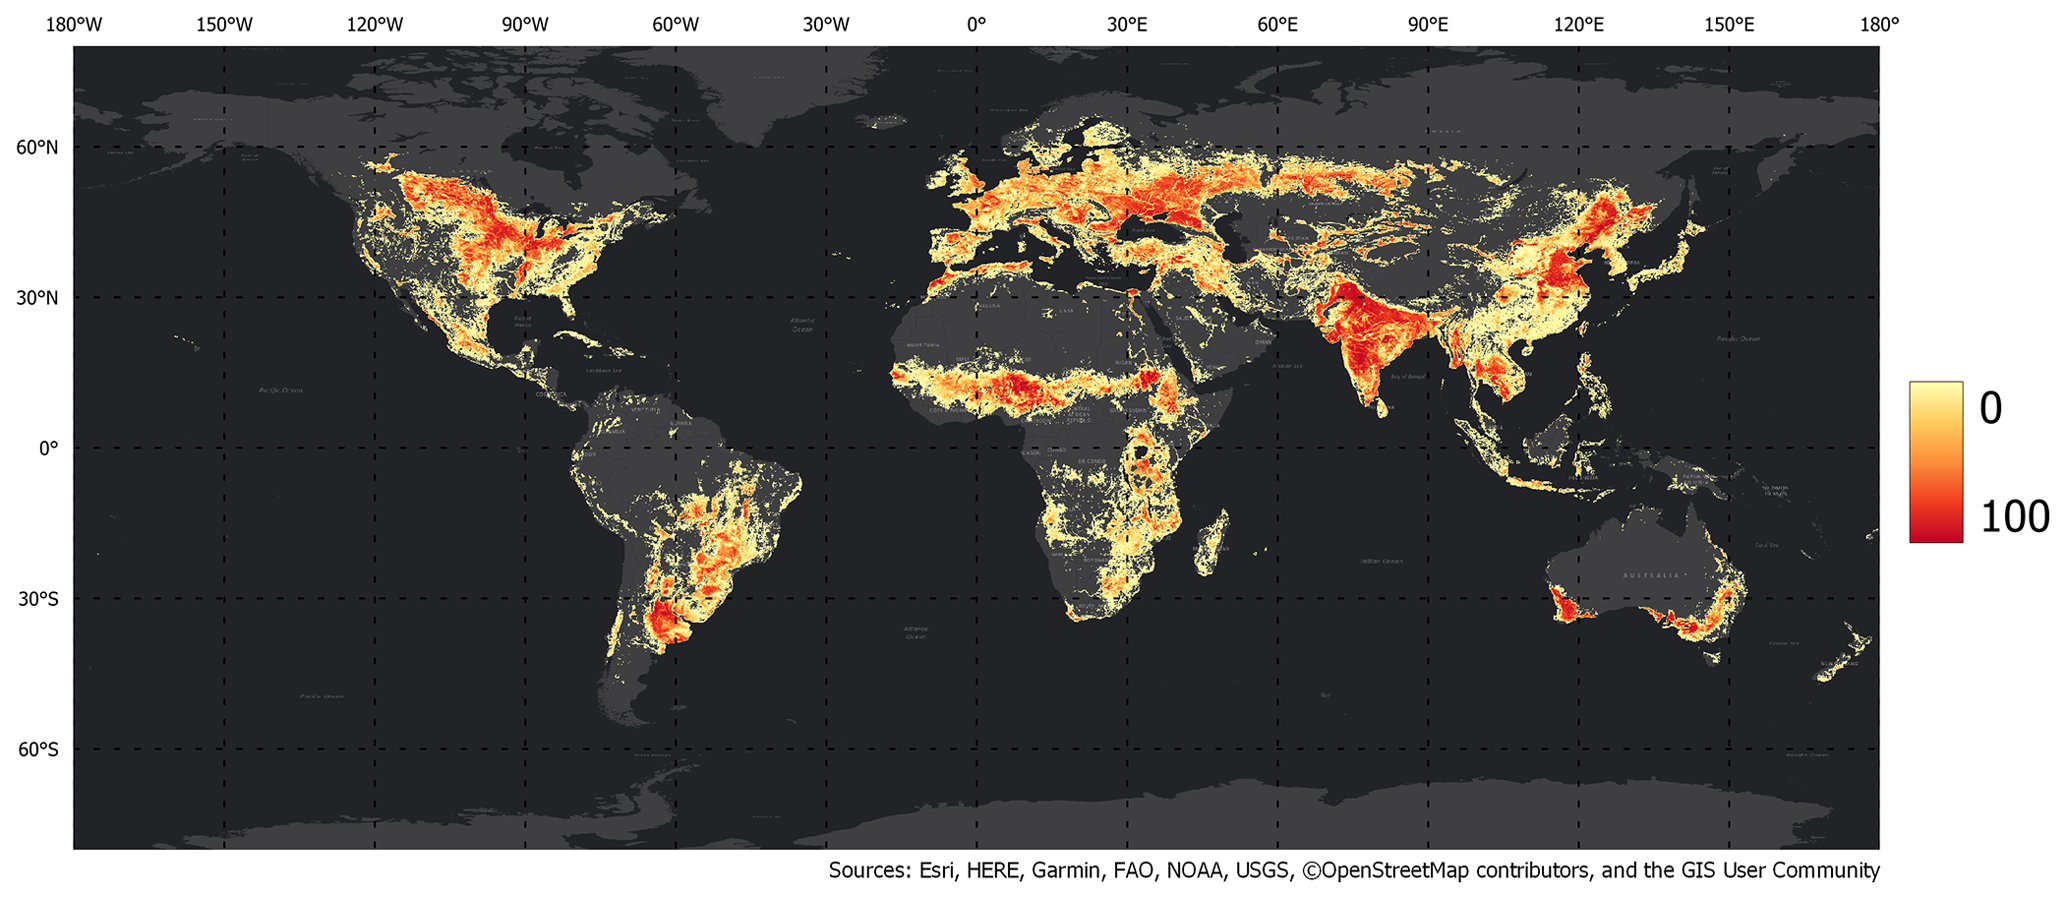 Geo-wiki and Cropland Capture: Citizen scientists help identify arable land